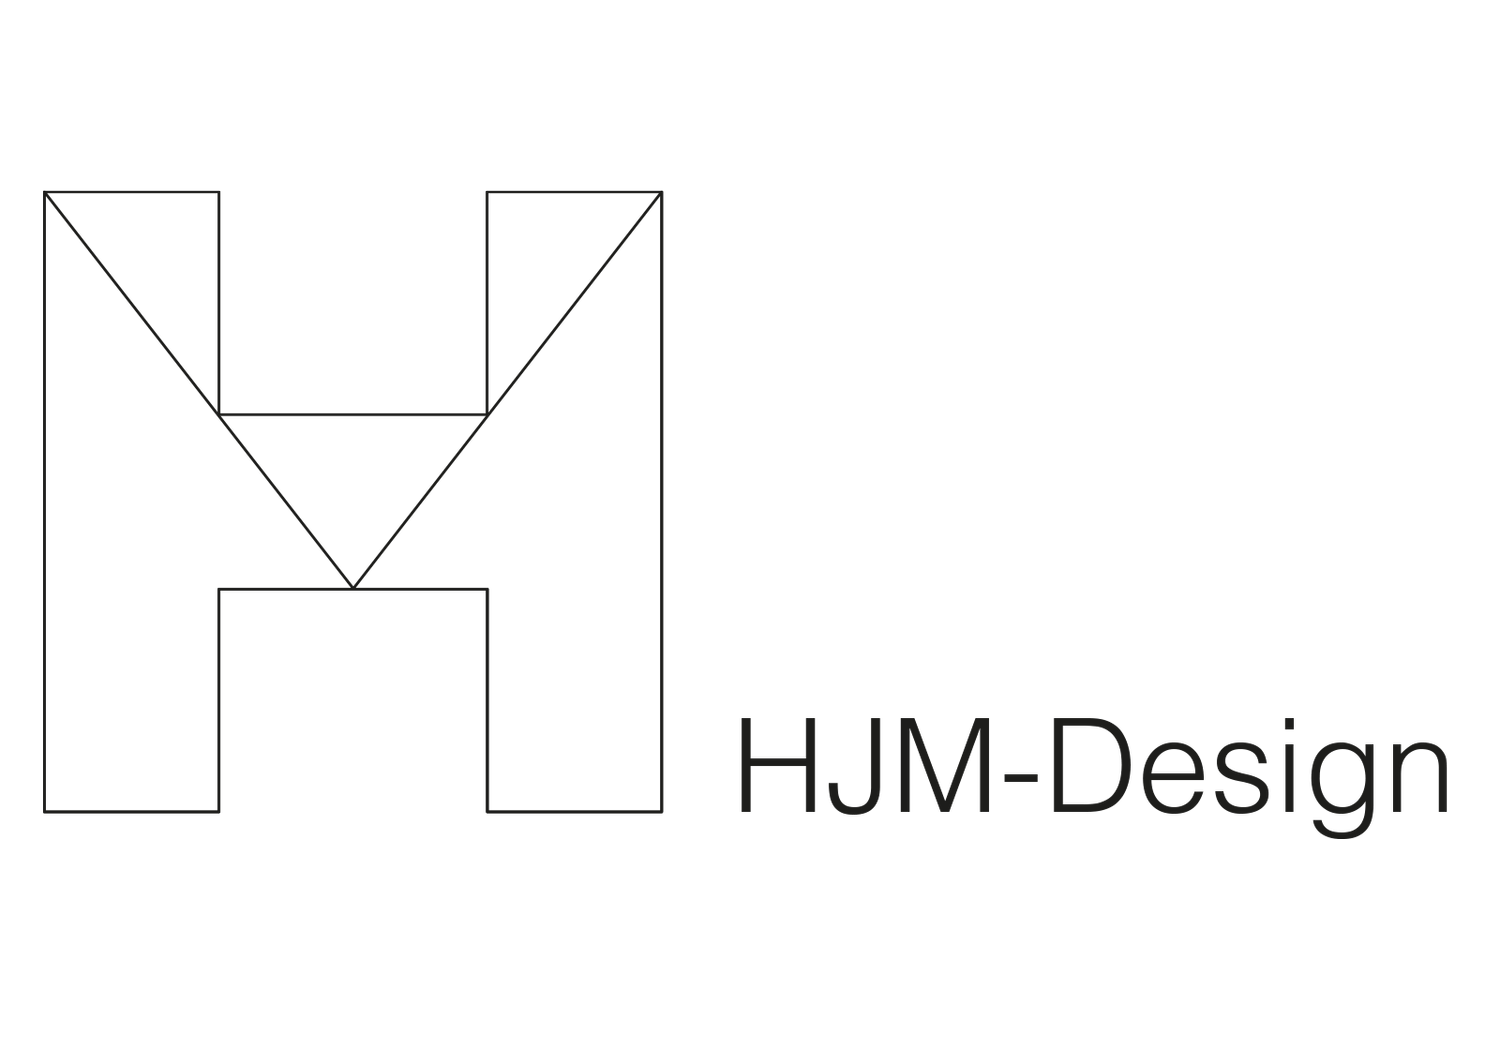  HJM Design